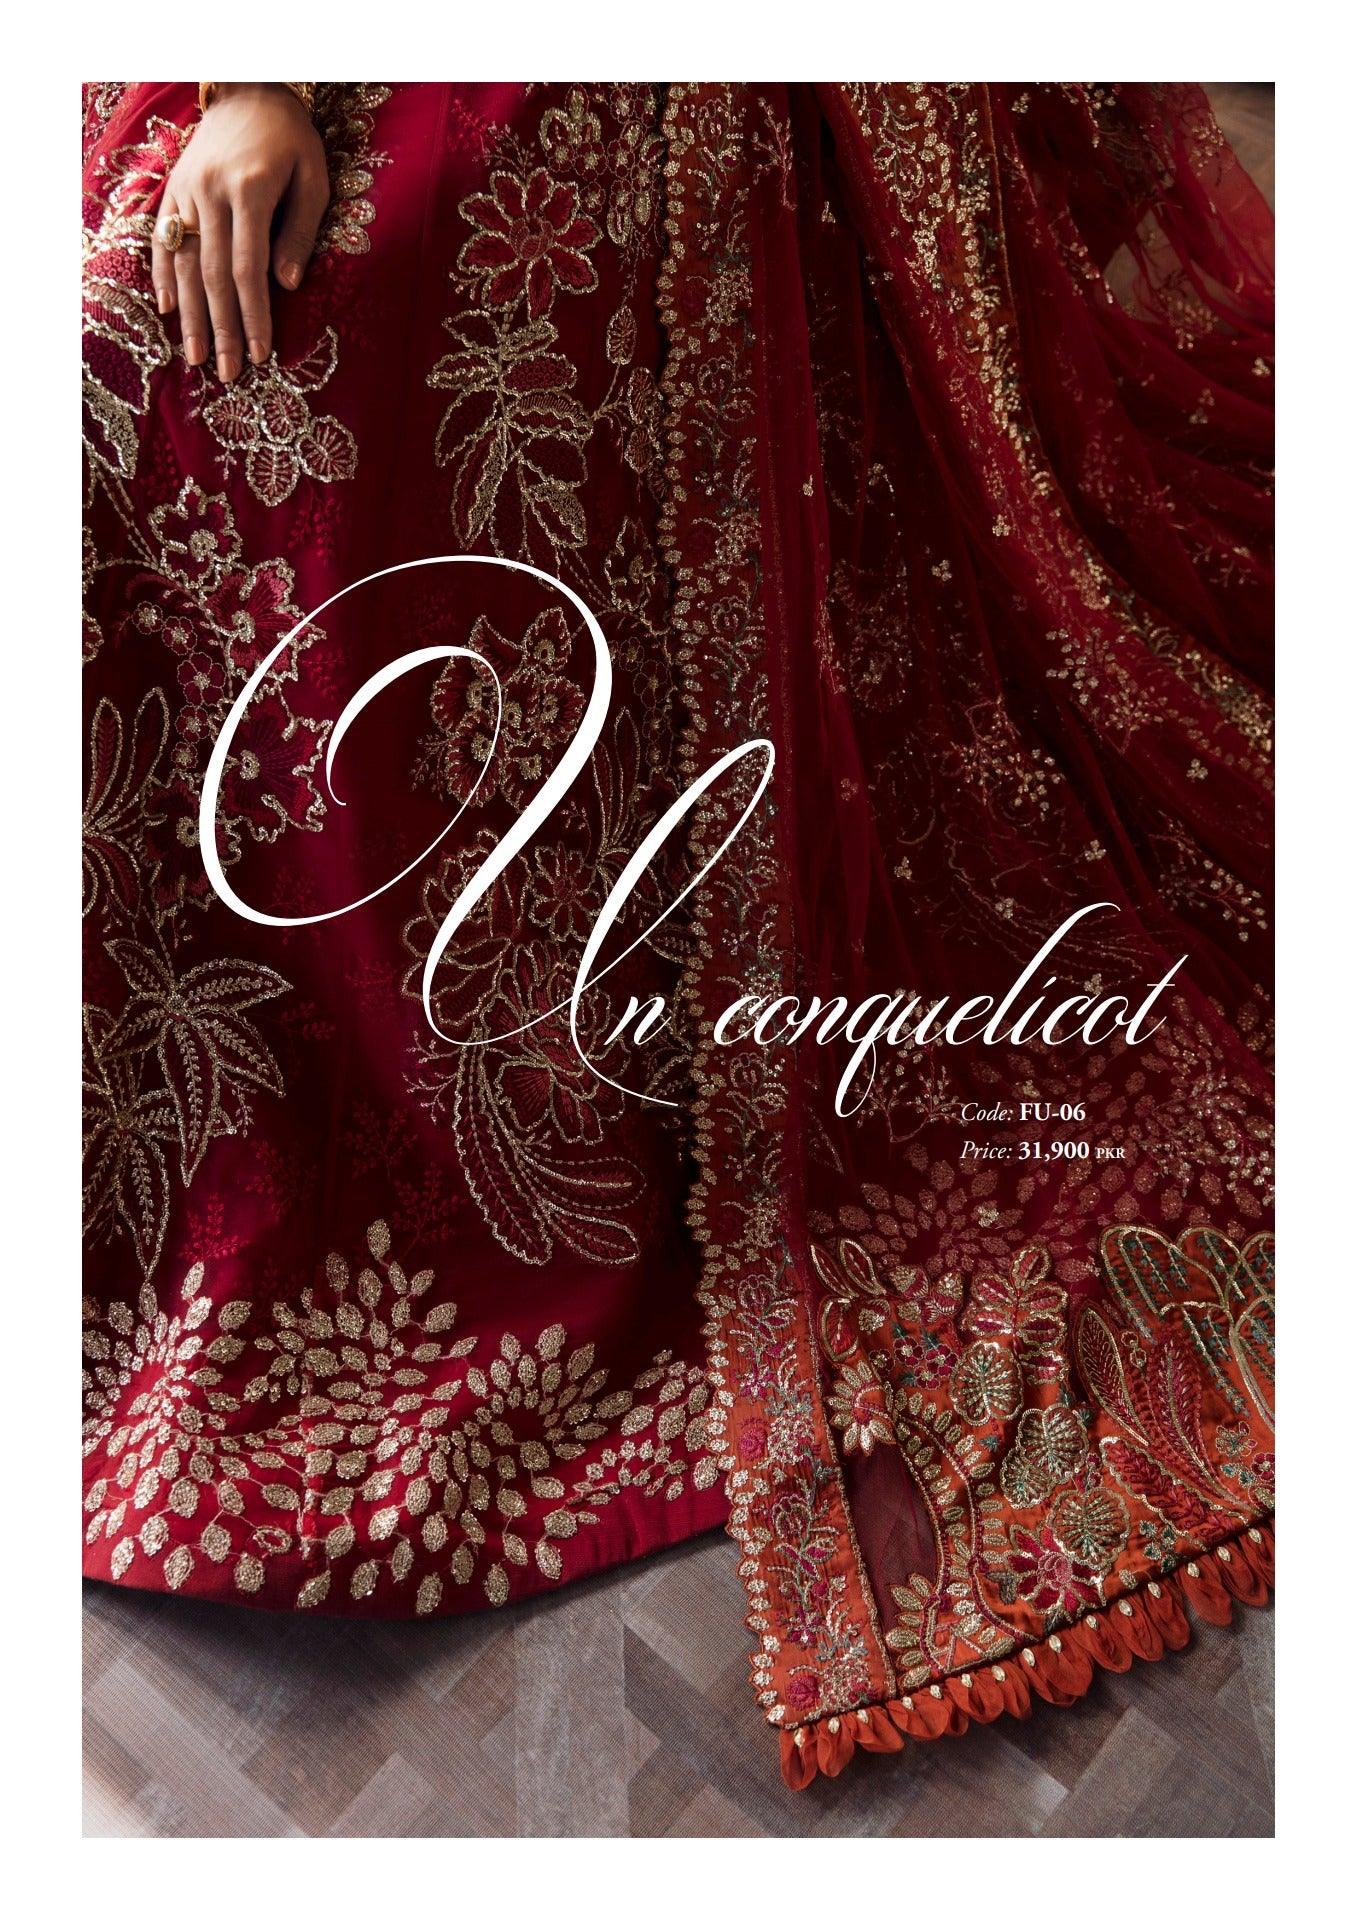 Un Conquelicot - WU6 - Claire De Lune Wedding by Republic Womenswear - Un Conquelicot - WU6 - Claire De Lune Wedding by Republic Womenswear - Shahana Collection